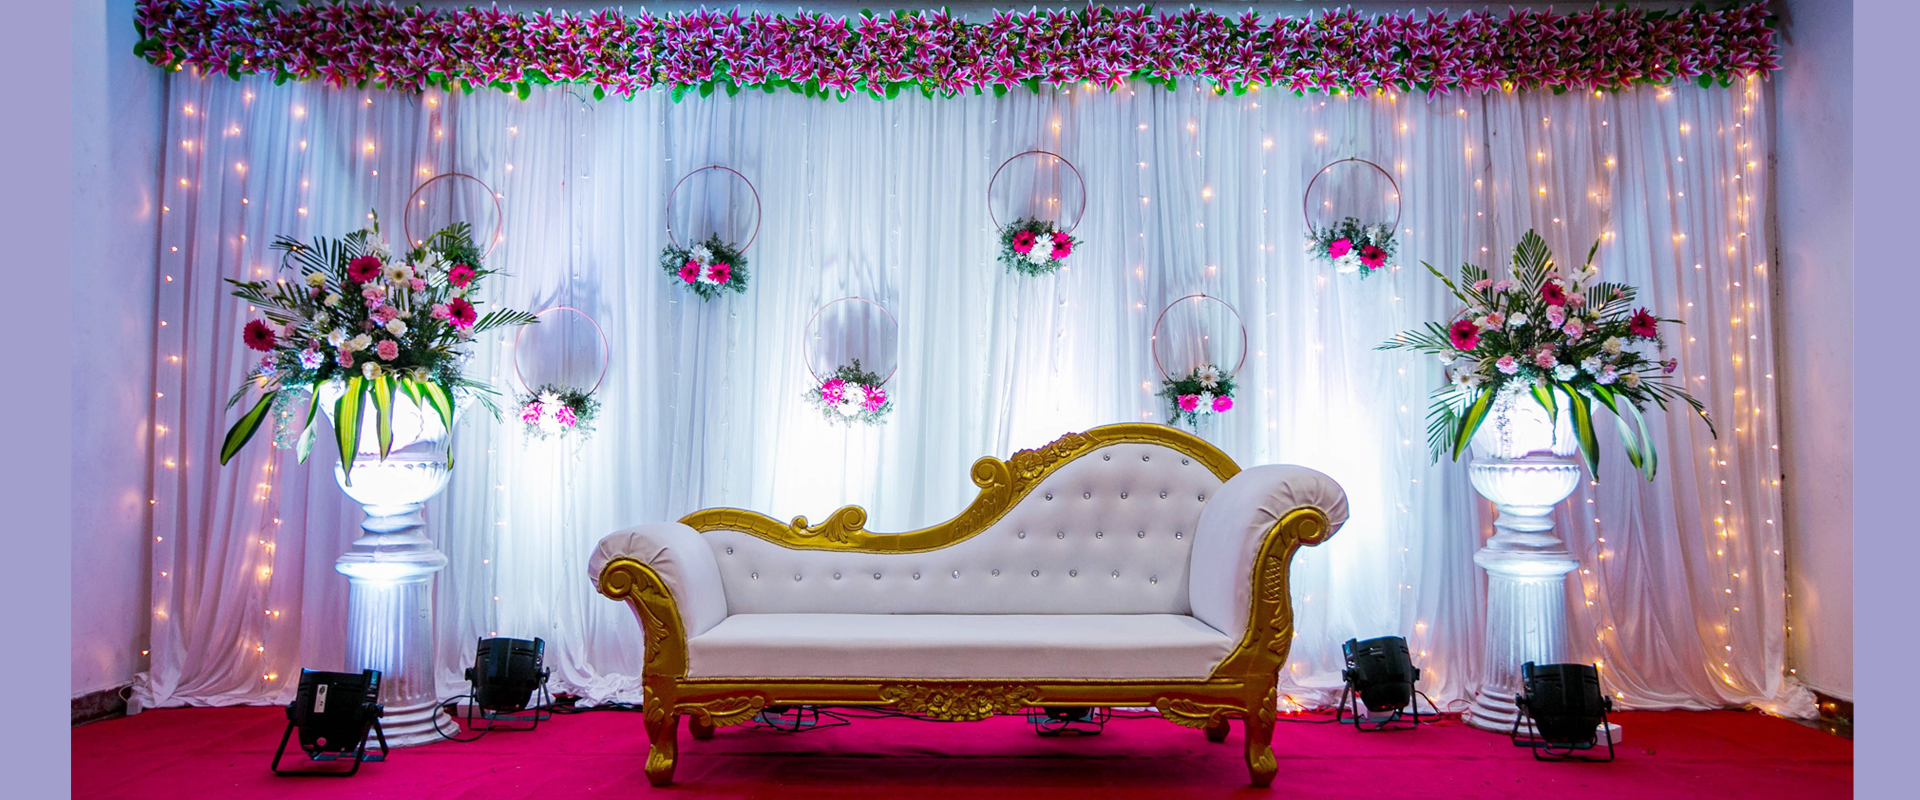 Wedding and event elegant flower arrangements
